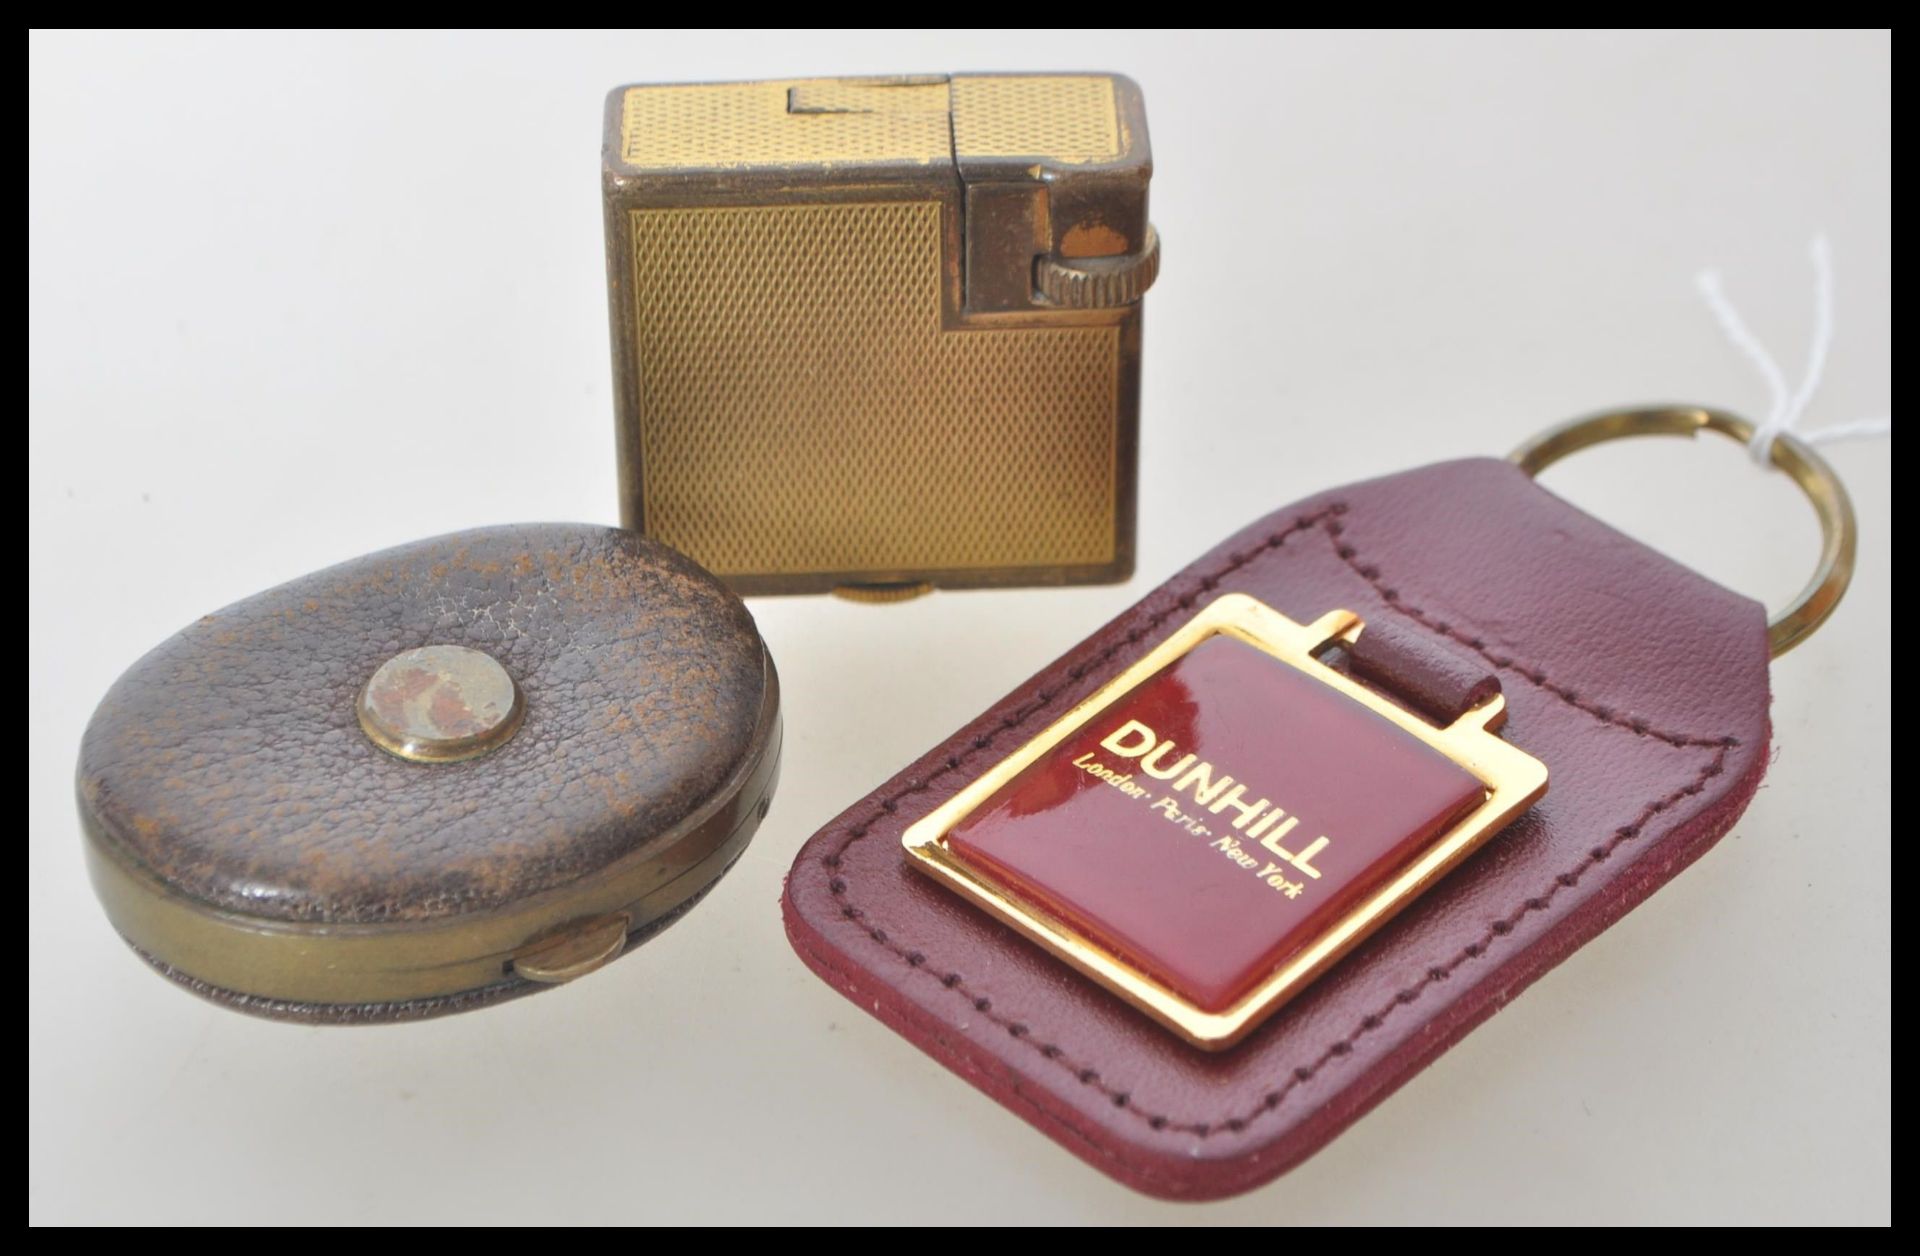 A vintage 20th Century smoking interest Dunhill Monaco cigarette lighter having a gold tone finish